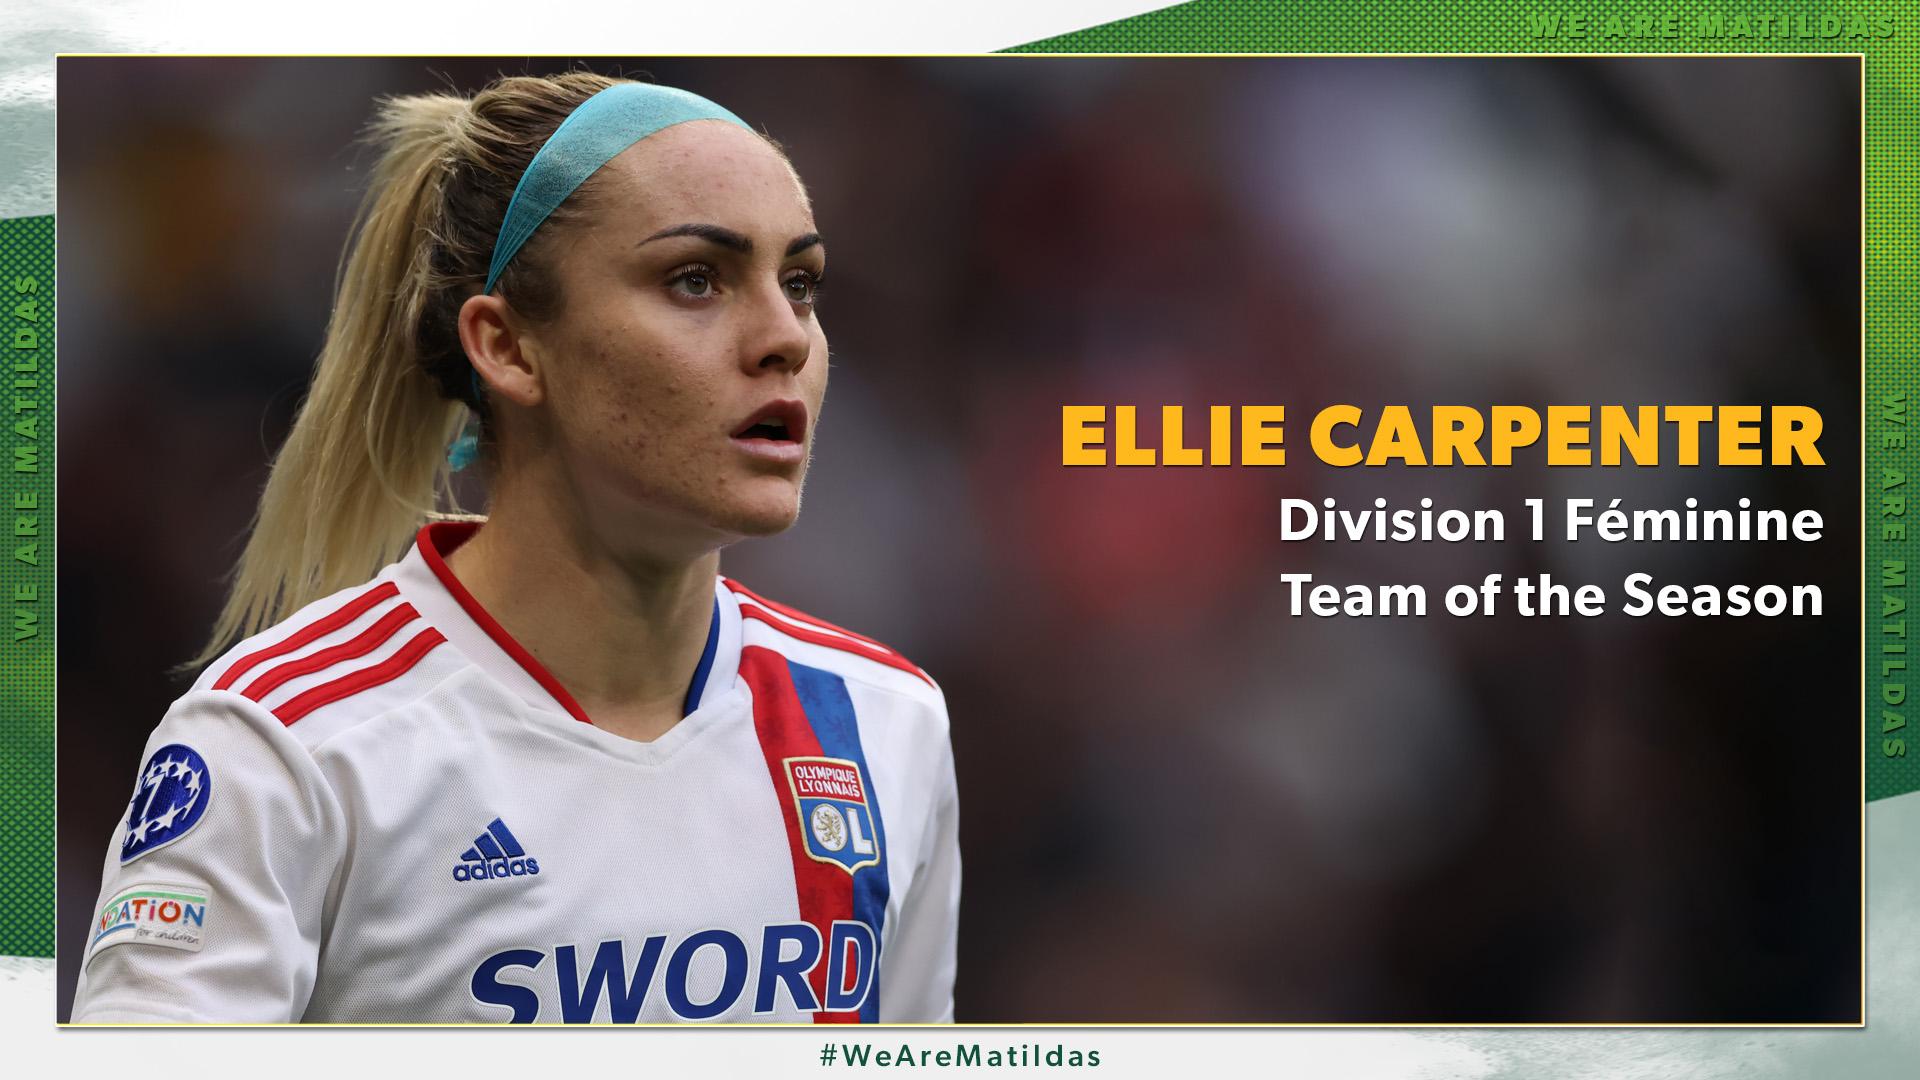 Ellie Carpenter named in the Division 1 Féminine Team of the Season